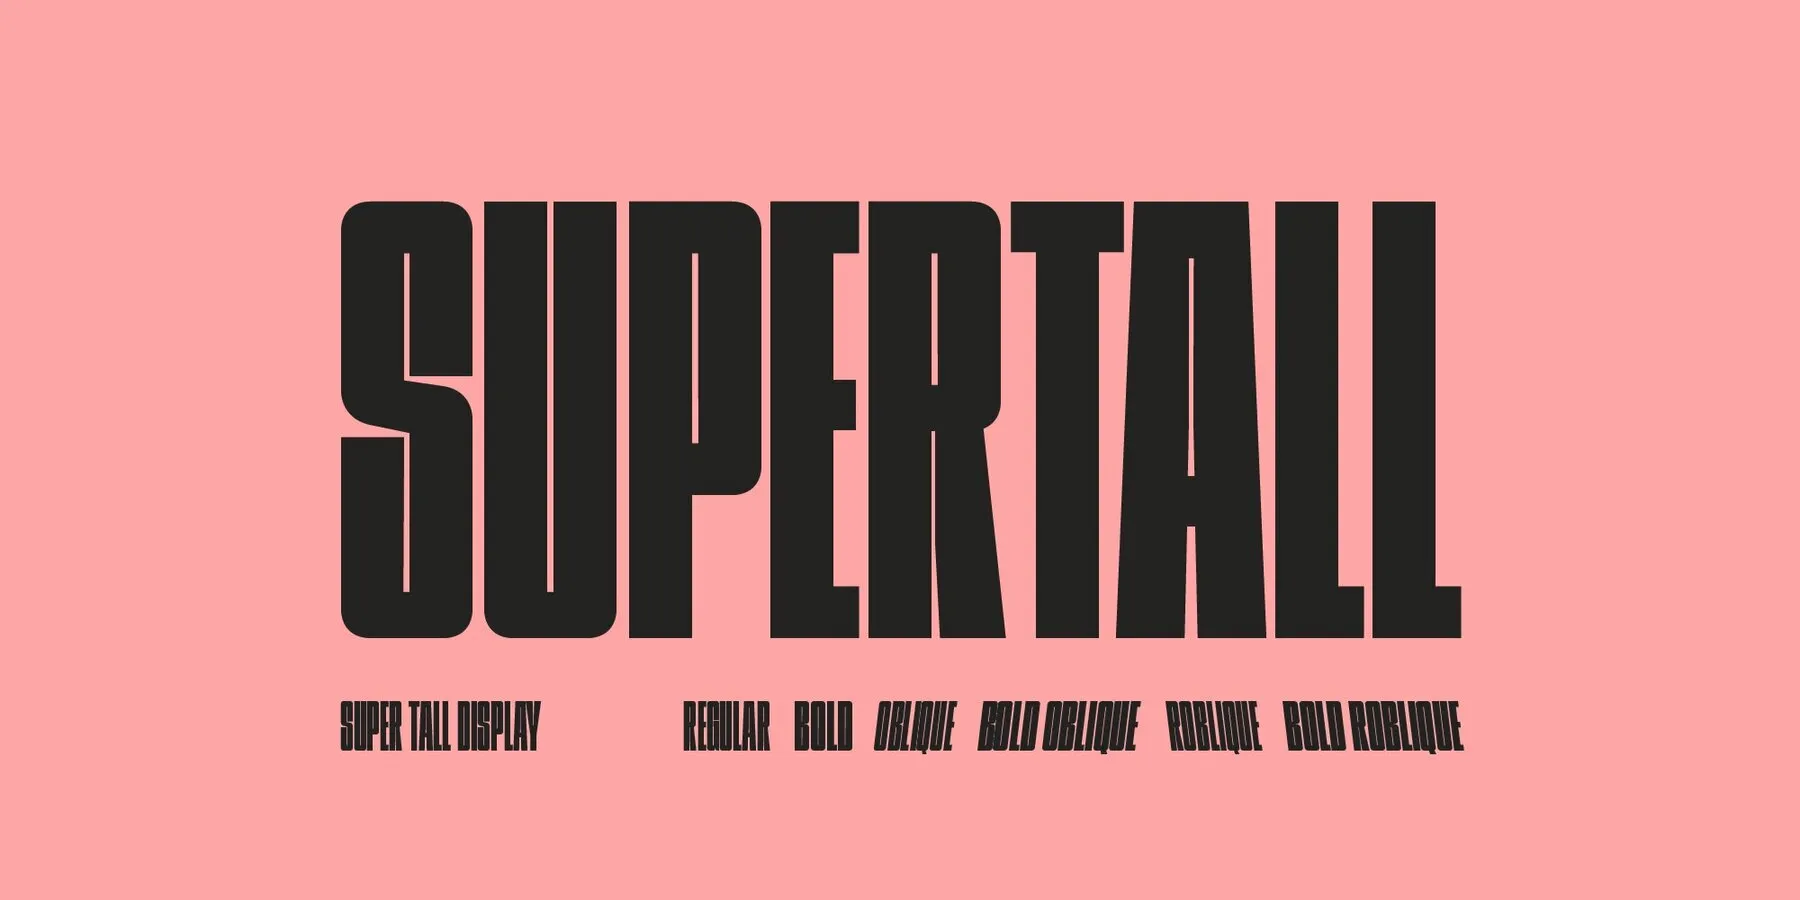 Supertall